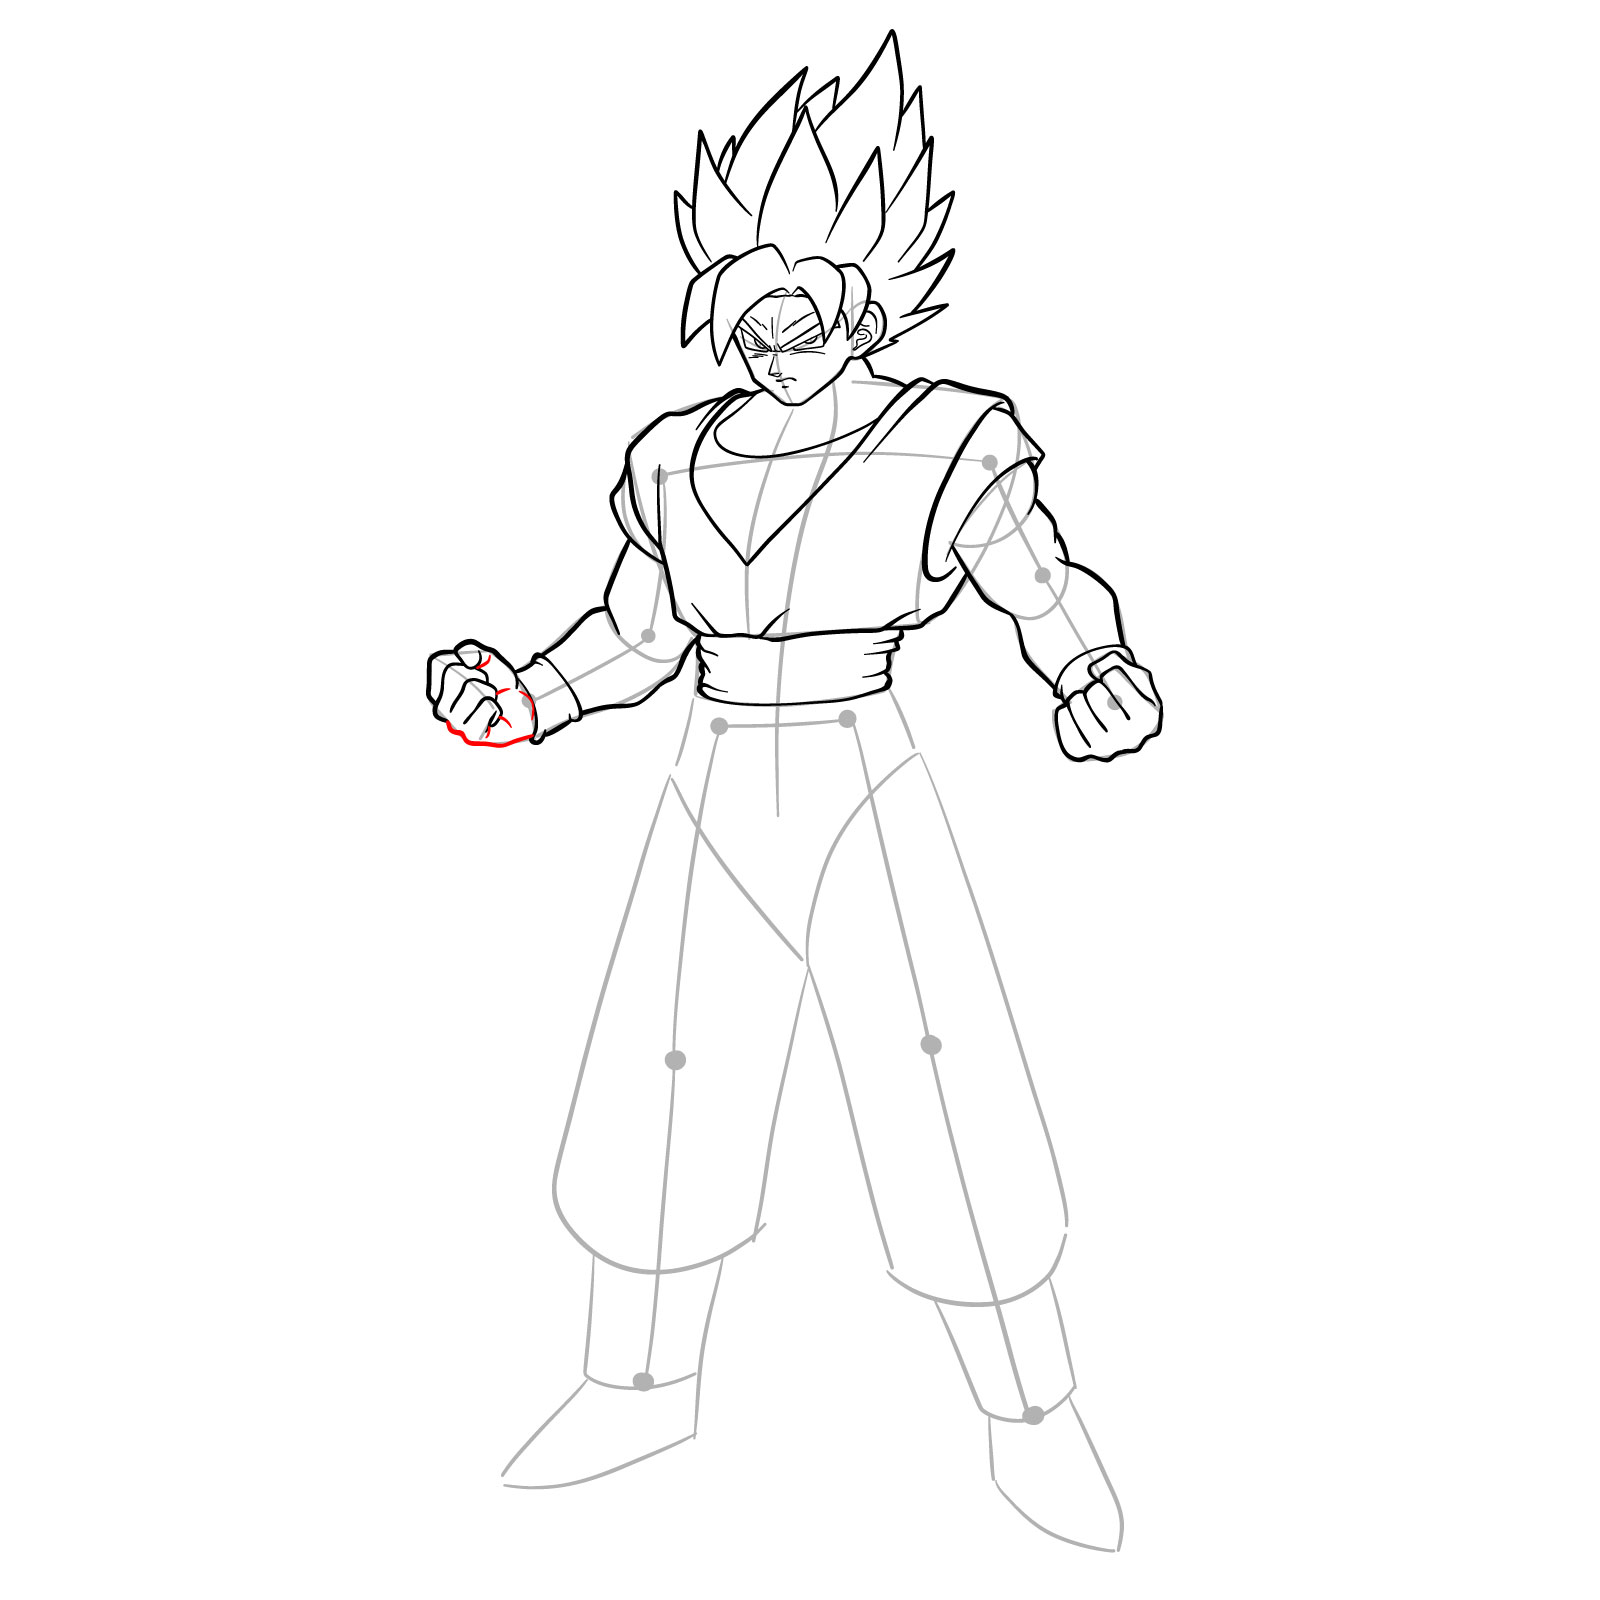 How to draw Goku in Super Saiyan form - step 28